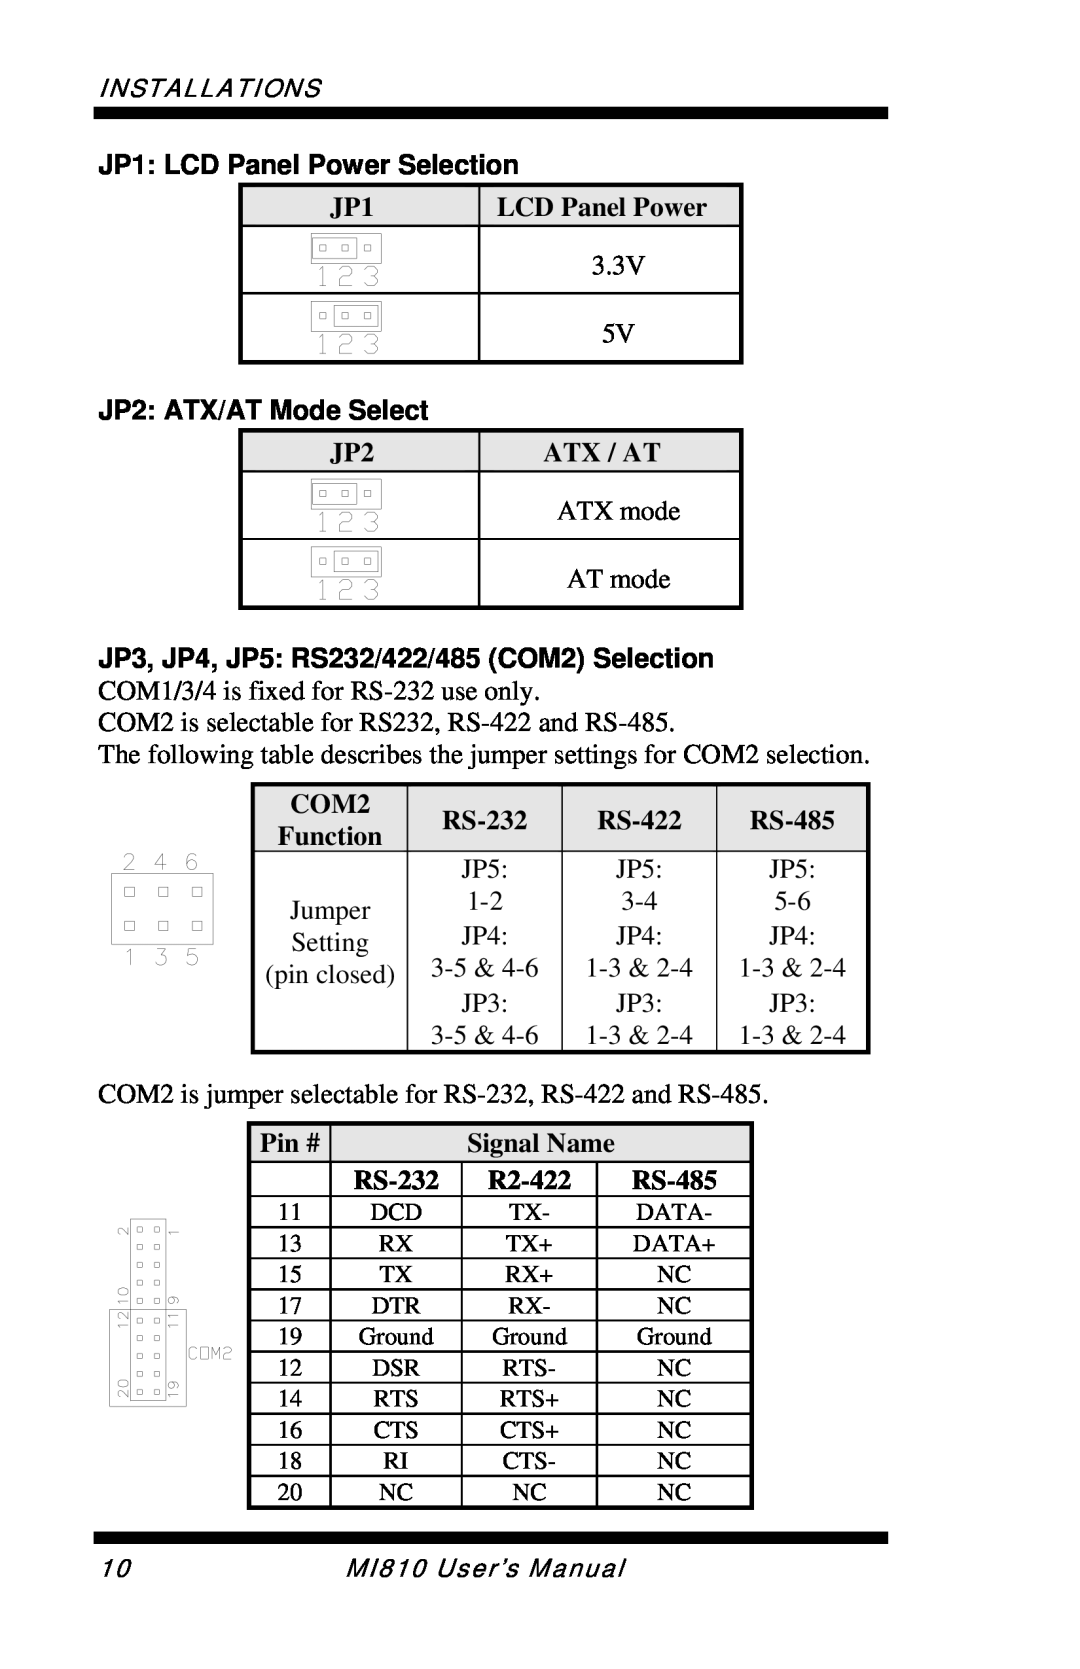 Intel MI810 JP1 LCD Panel Power Selection, JP2 ATX/AT Mode Select, Atx / At, COM2, RS-232, Function, RS-422, RS-485, Pin # 